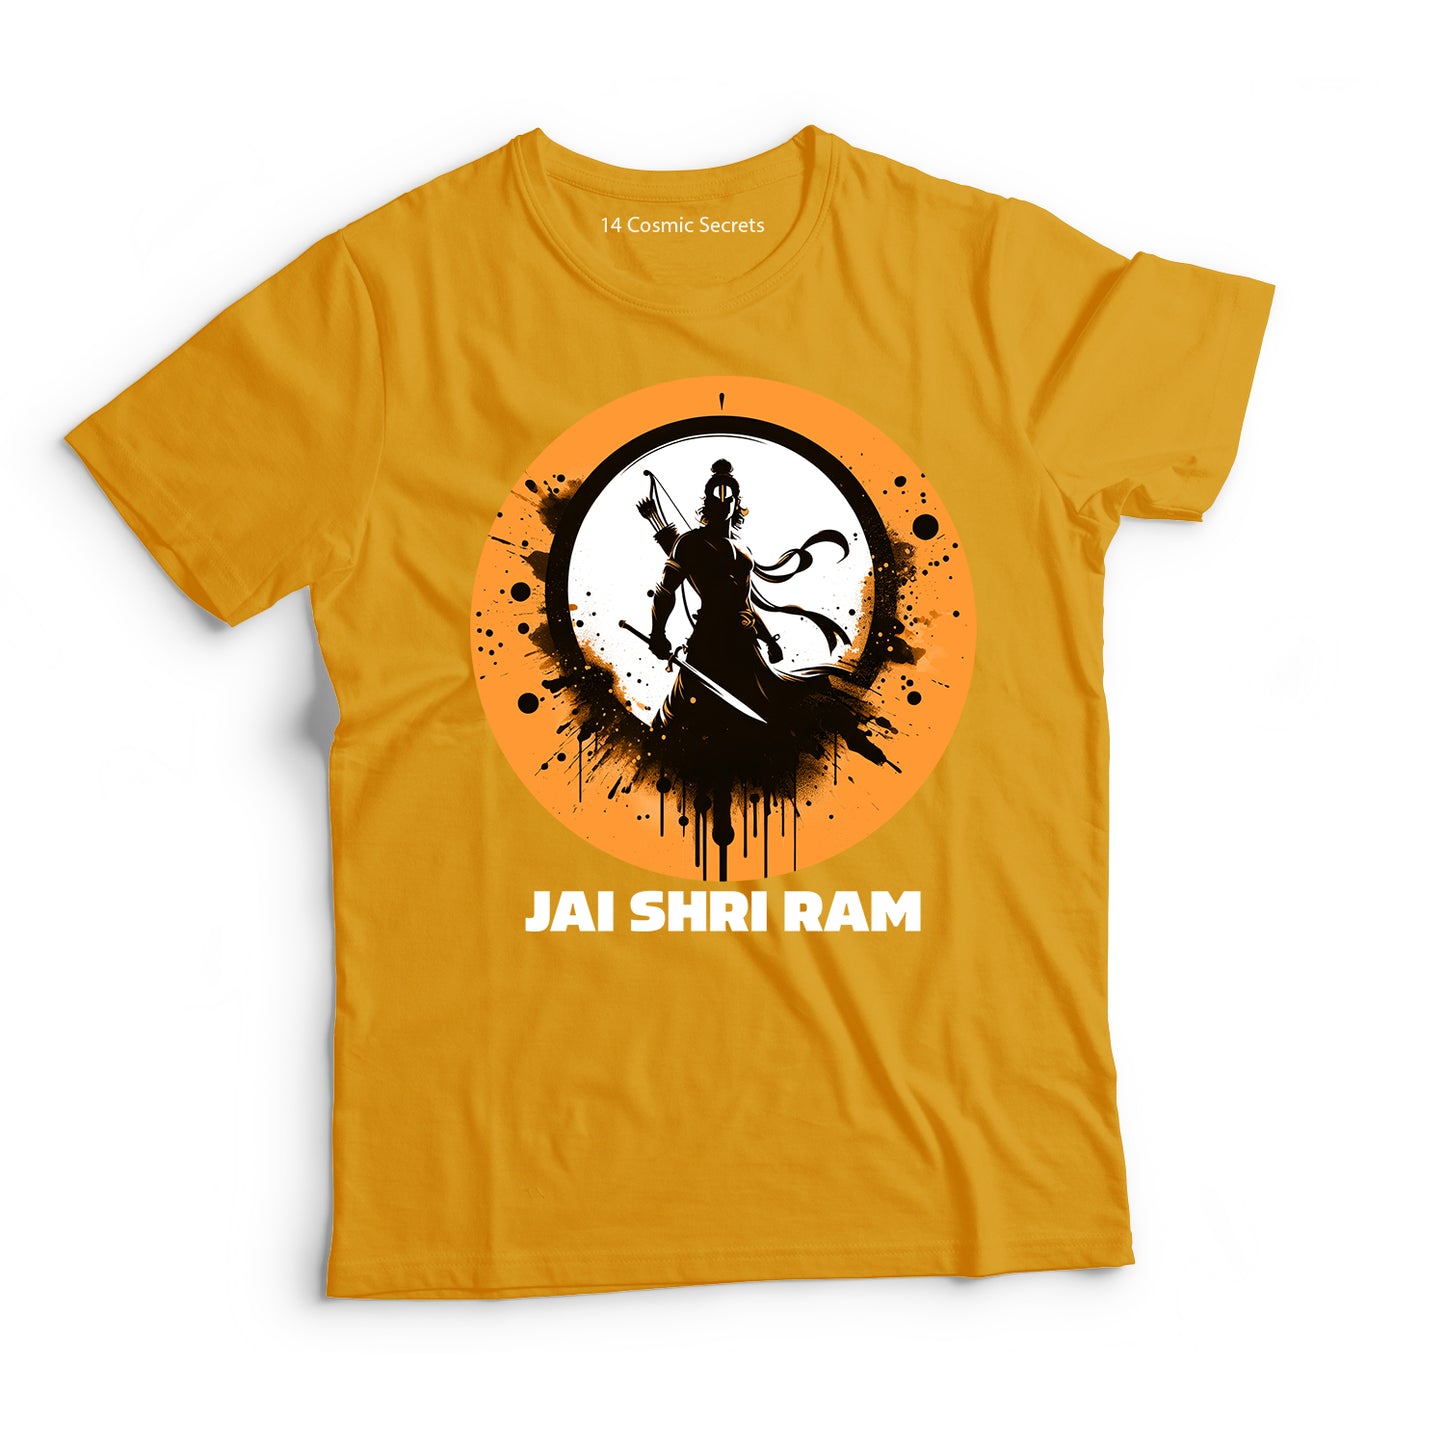 Ayodhya's Pride: Rama Silhouette Graphic Printed T-Shirt for Men Cotton T-Shirt Original Super Heroes of India T-Shirt